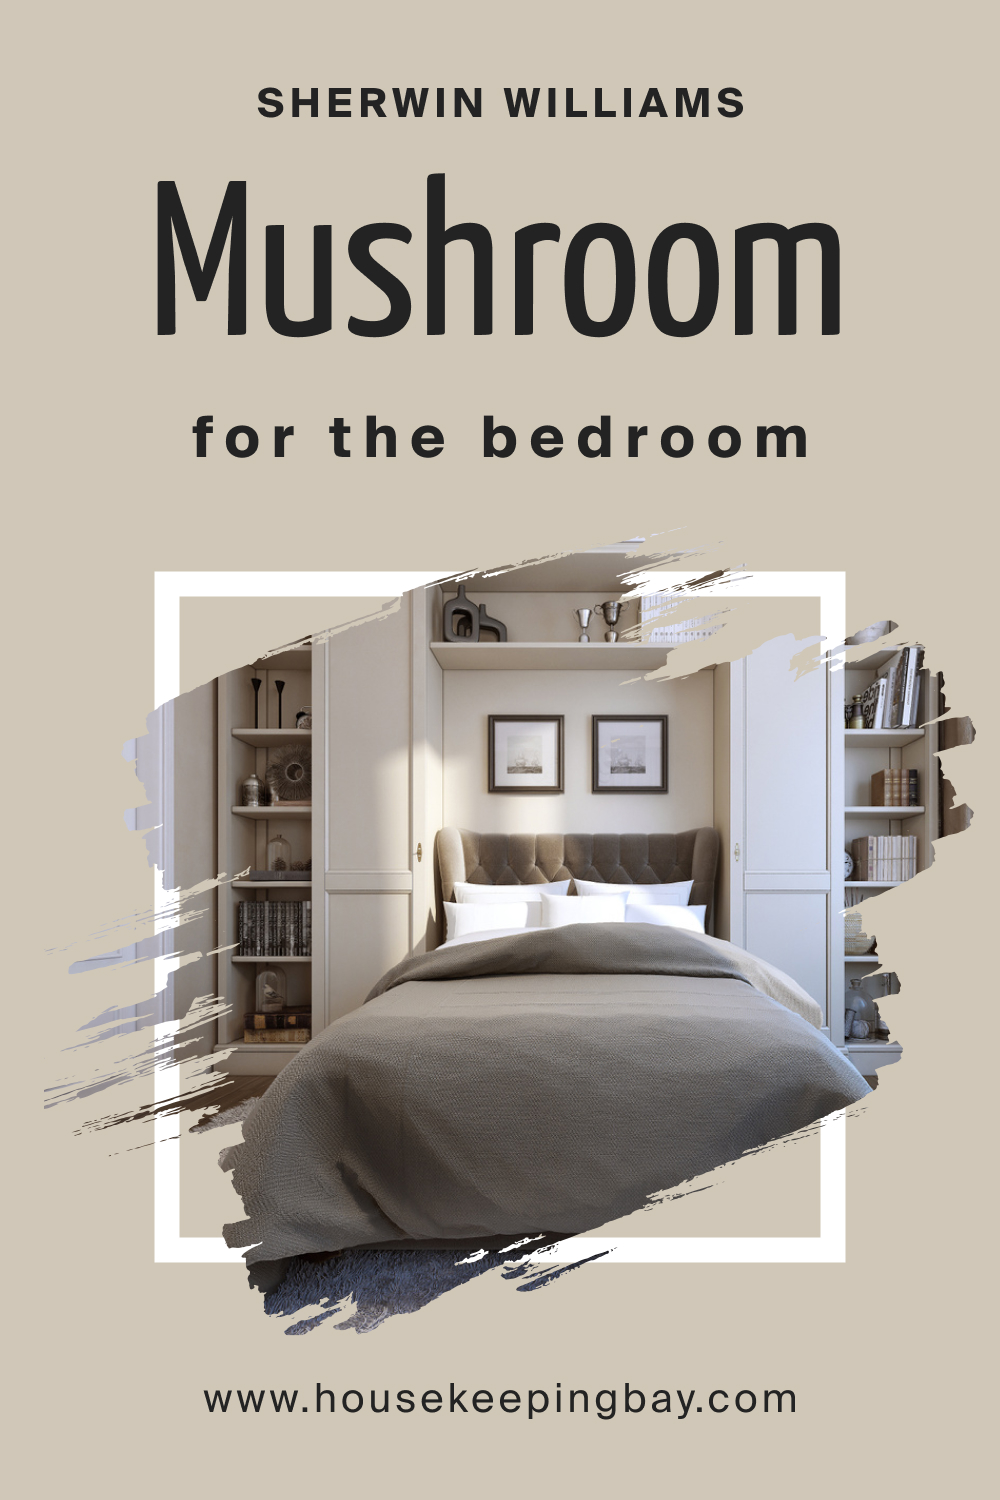 Sherwin Williams. SW Mushroom For the bedroom